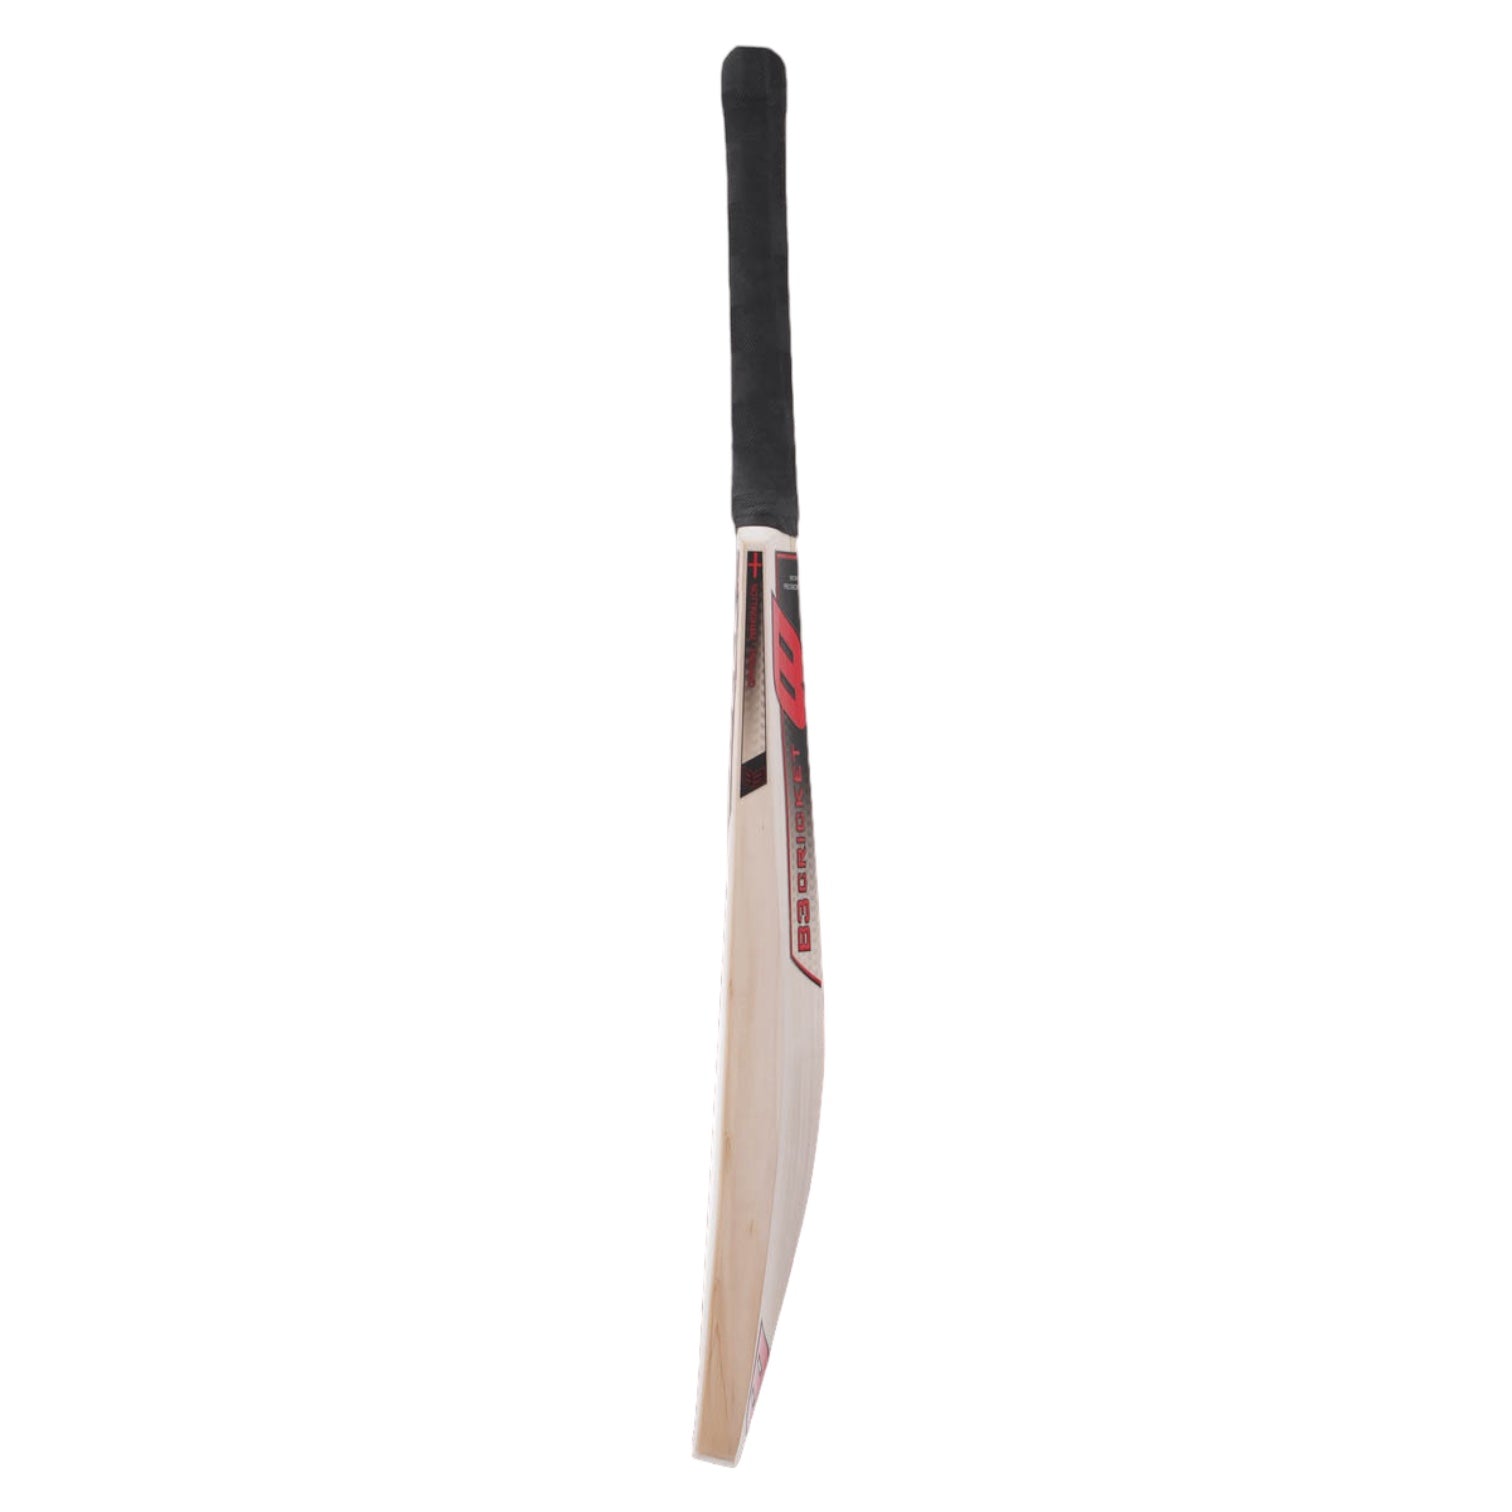 B3 Cricket Tempo Elite LE (Grade 1 LE) Cricket Bat - The Cricket Store